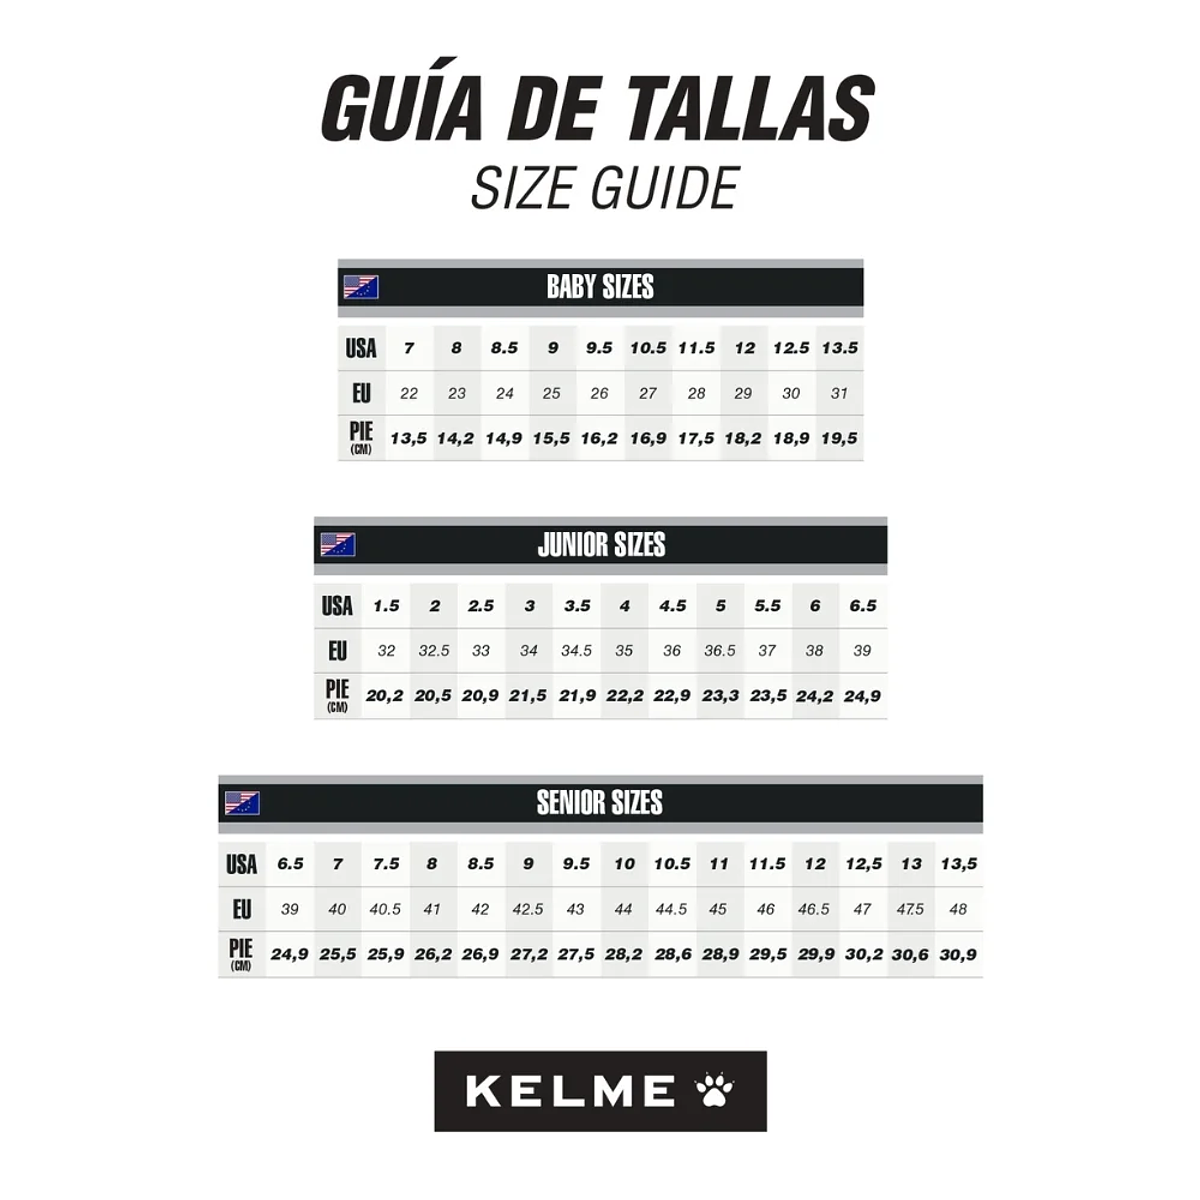 Zapatillas Running K-Rookie Azul - KELME Tienda Online Oficial